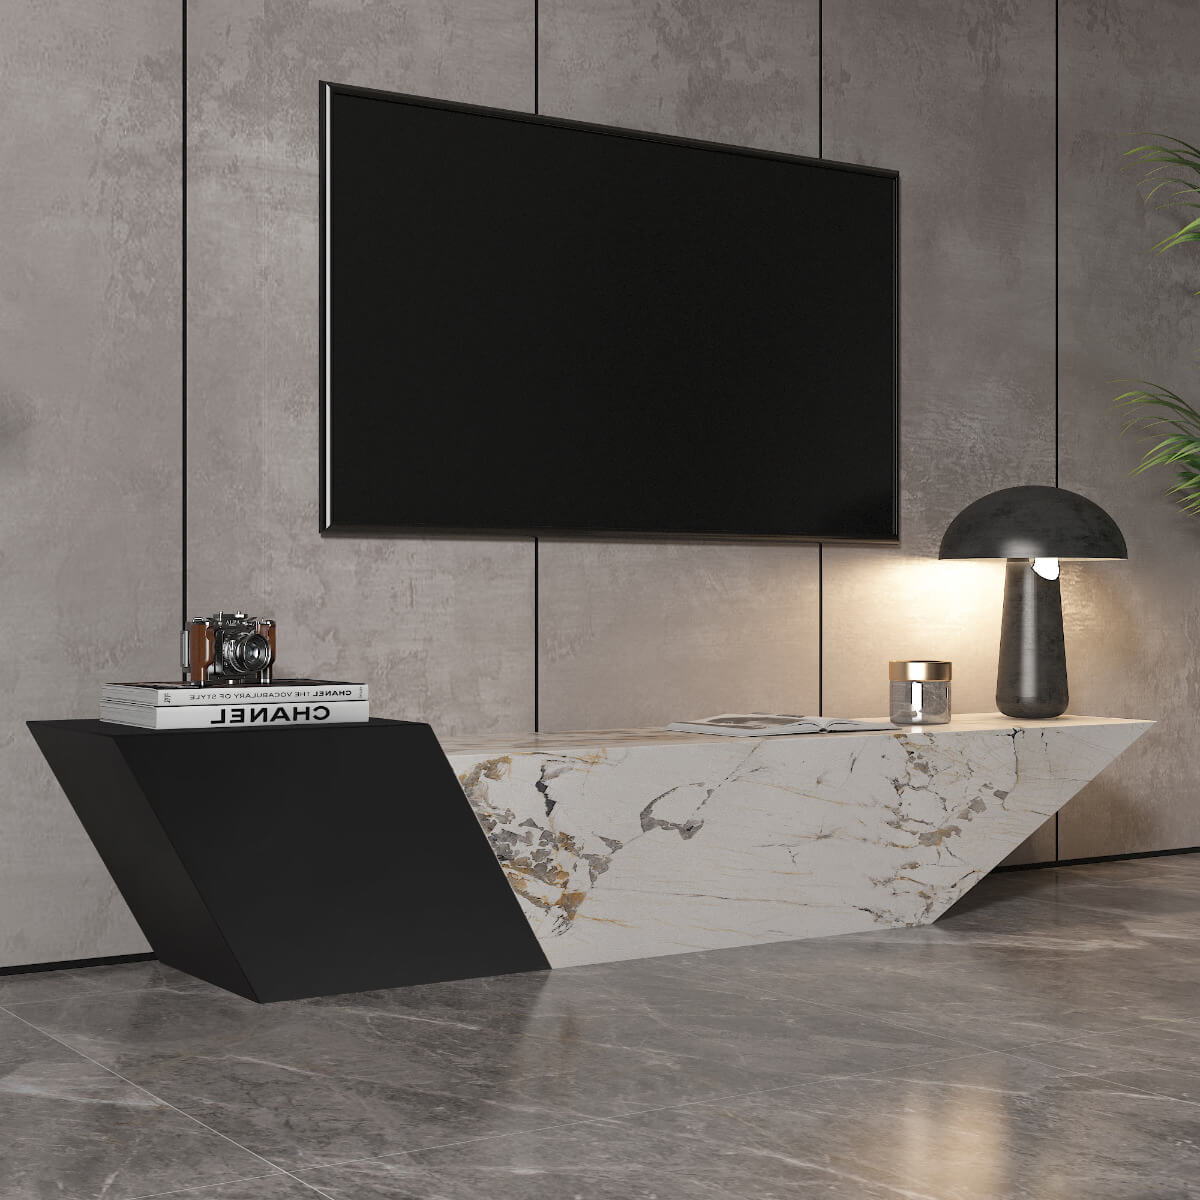 Nordic Slate Tv Stand For Living Room Furniture Modern Minimalist